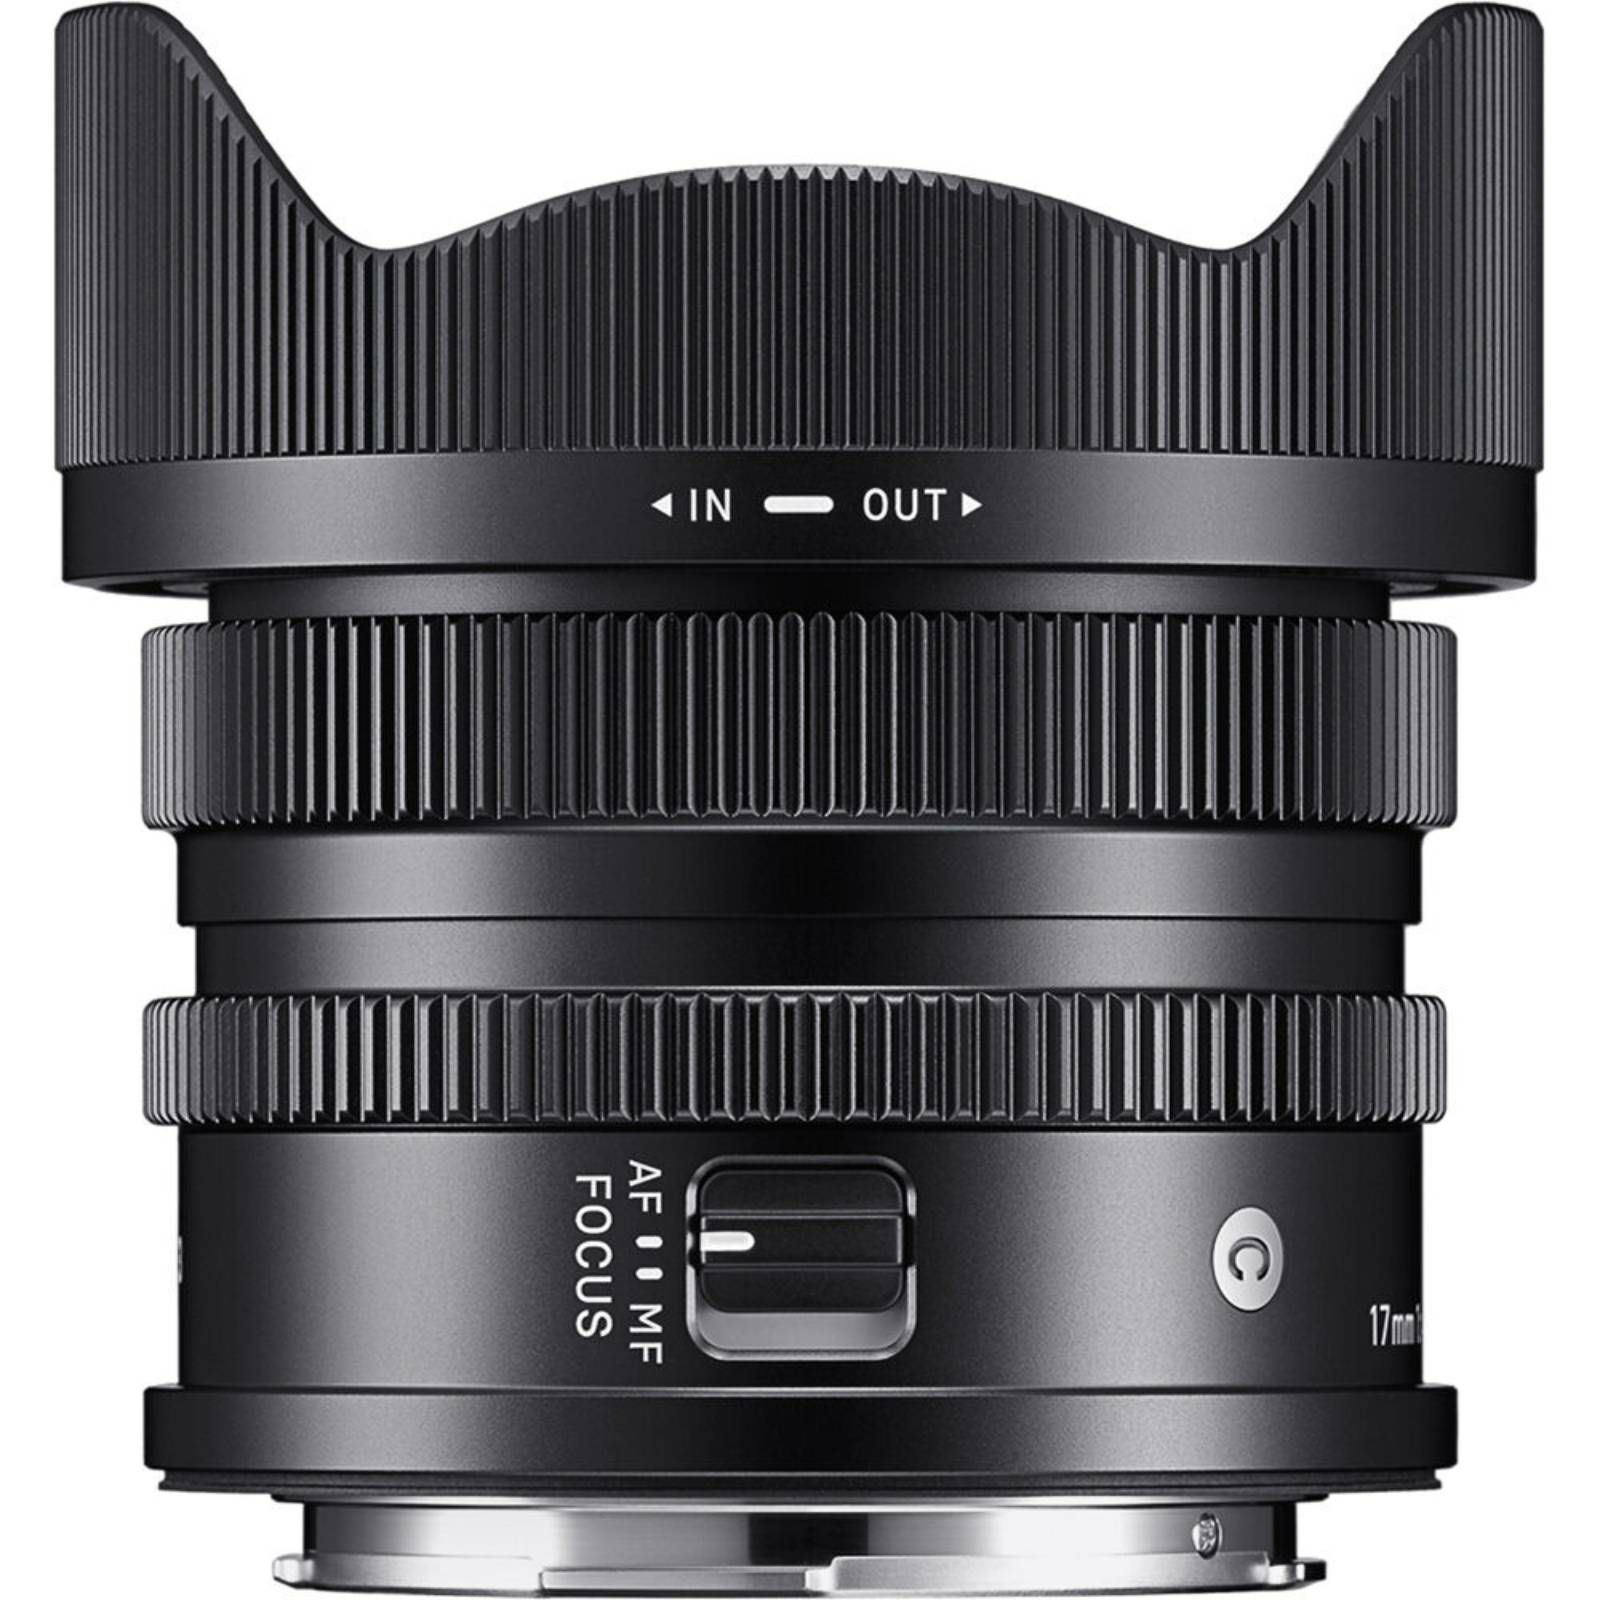 Sigma 17mm f/4 DG DN Contemporary objektiv za Panasonic Leica L-mount